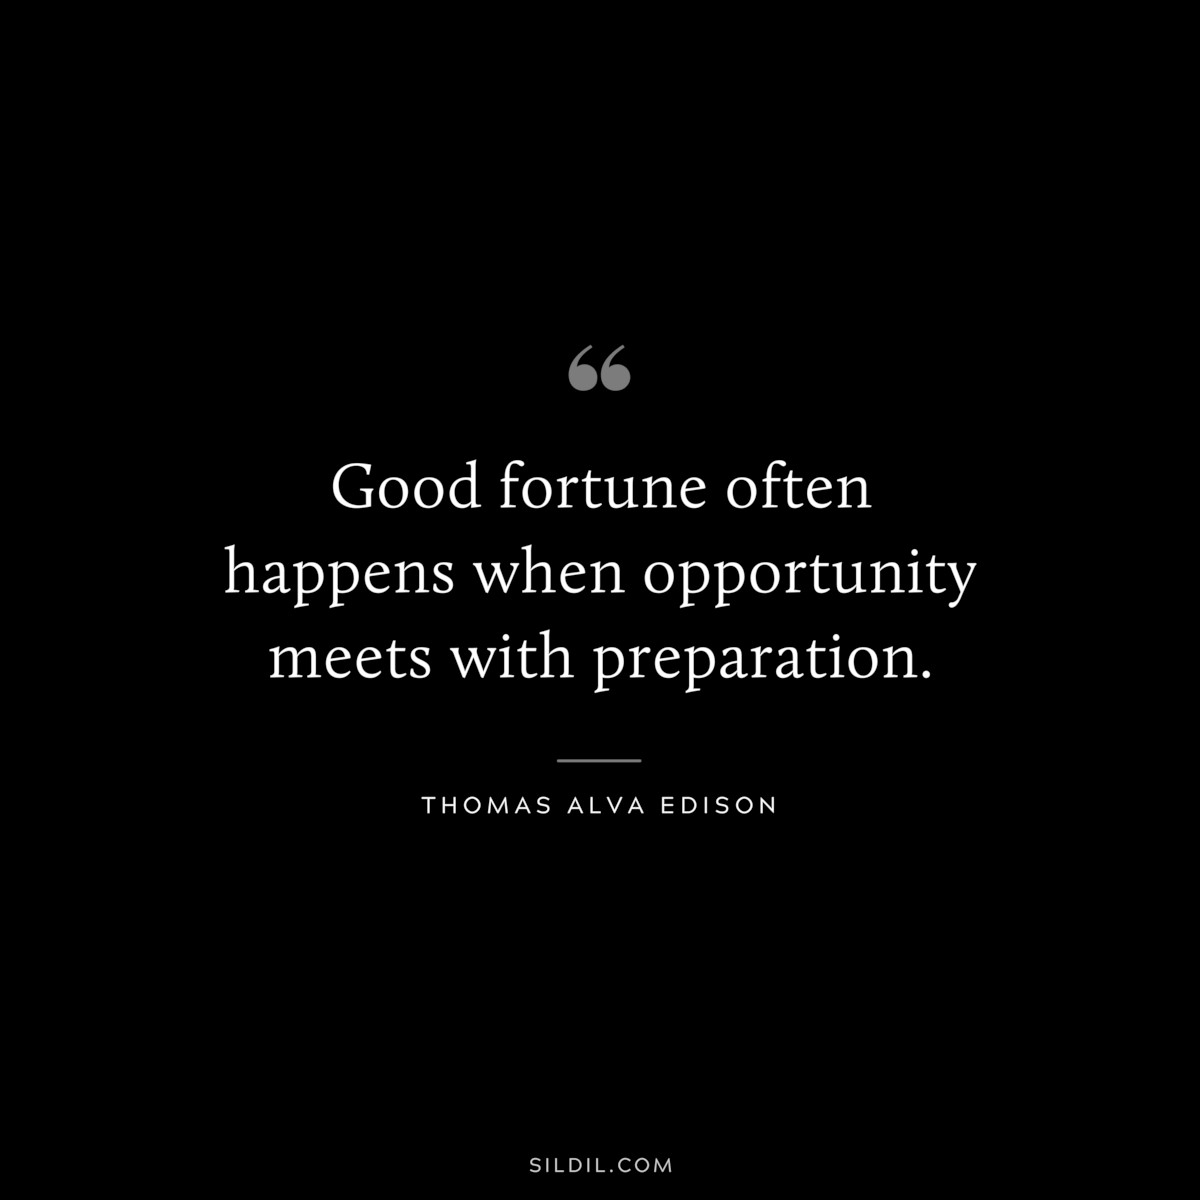 Good fortune often happens when opportunity meets with preparation. ― Thomas Alva Edison